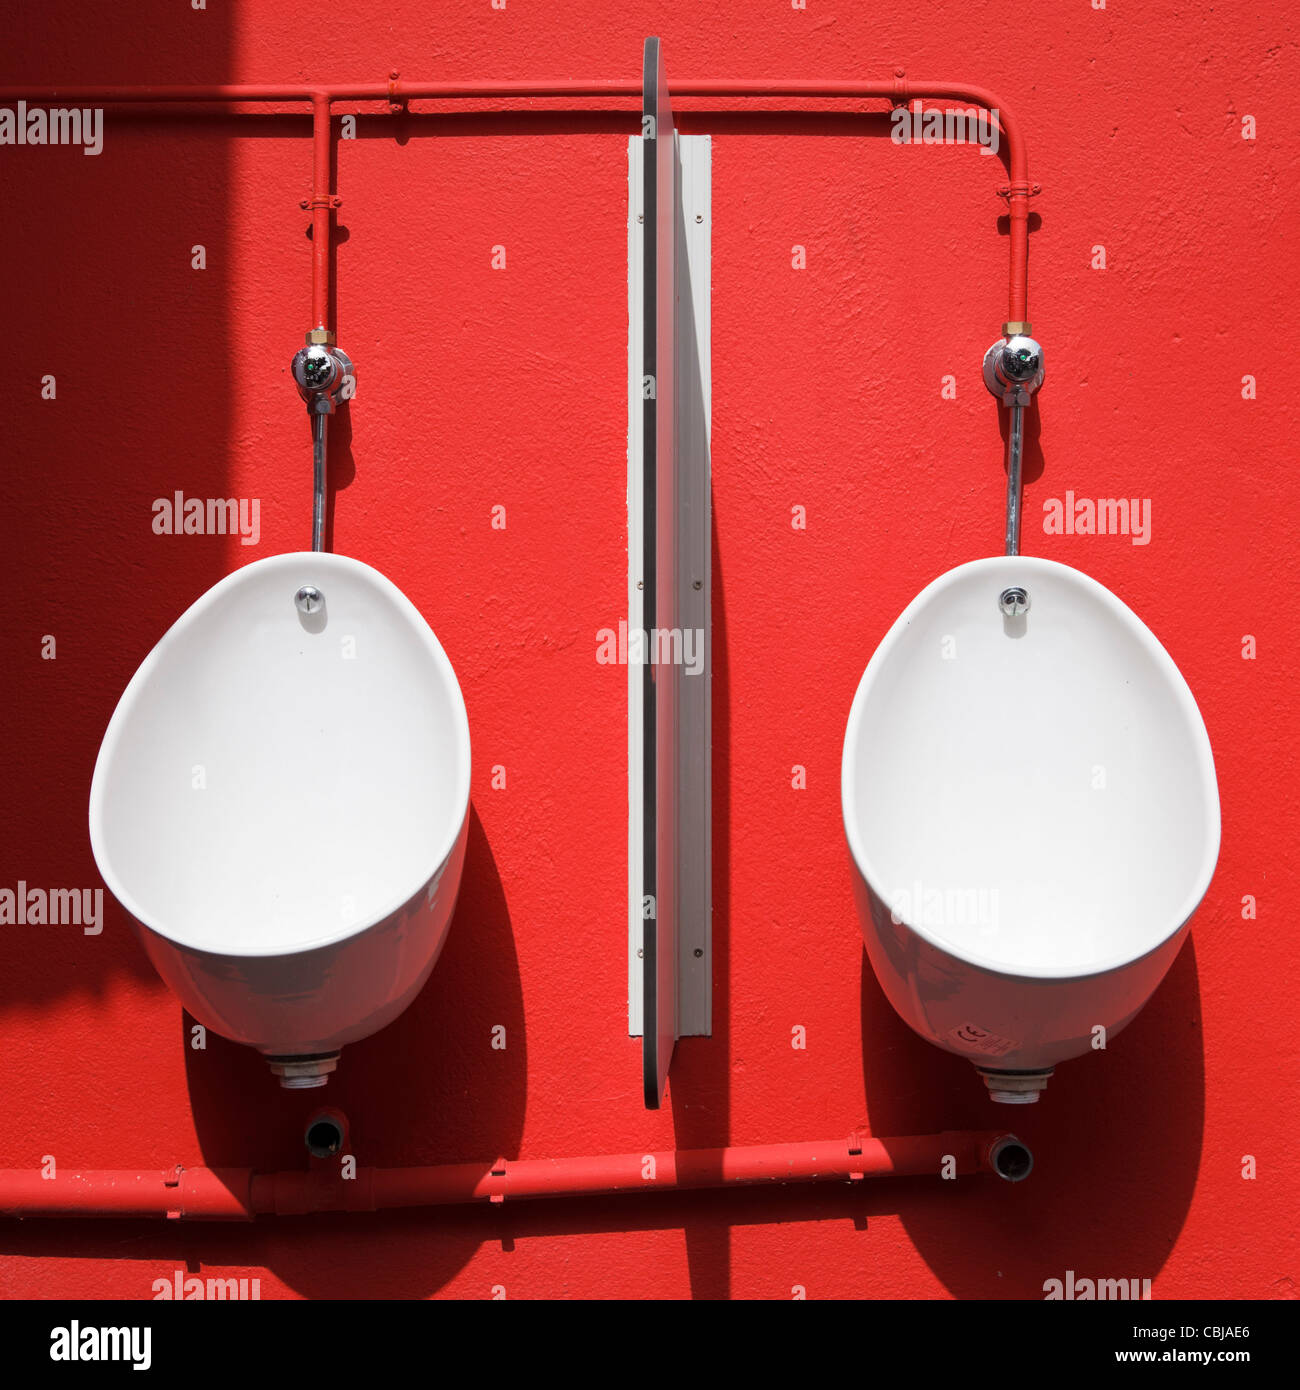 Toilets, urinals Stock Photo